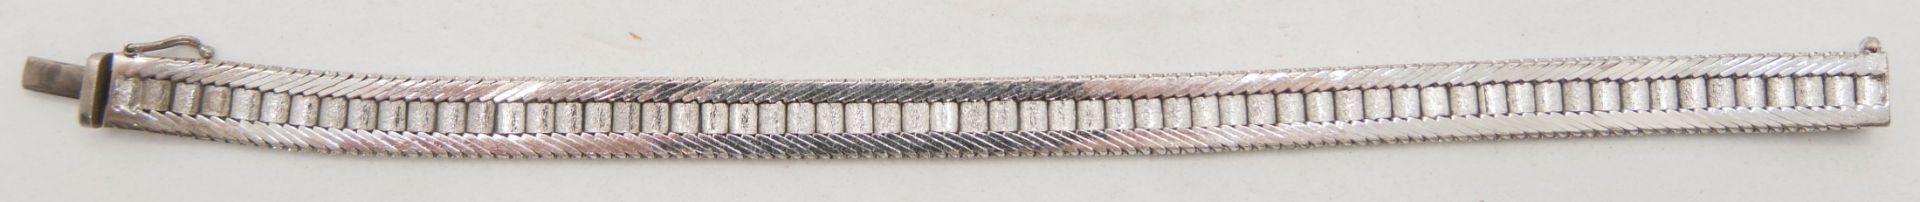 Armband, 800er Silber JSF gepunzt, Länge ca. 19,5 cm. - Image 2 of 2